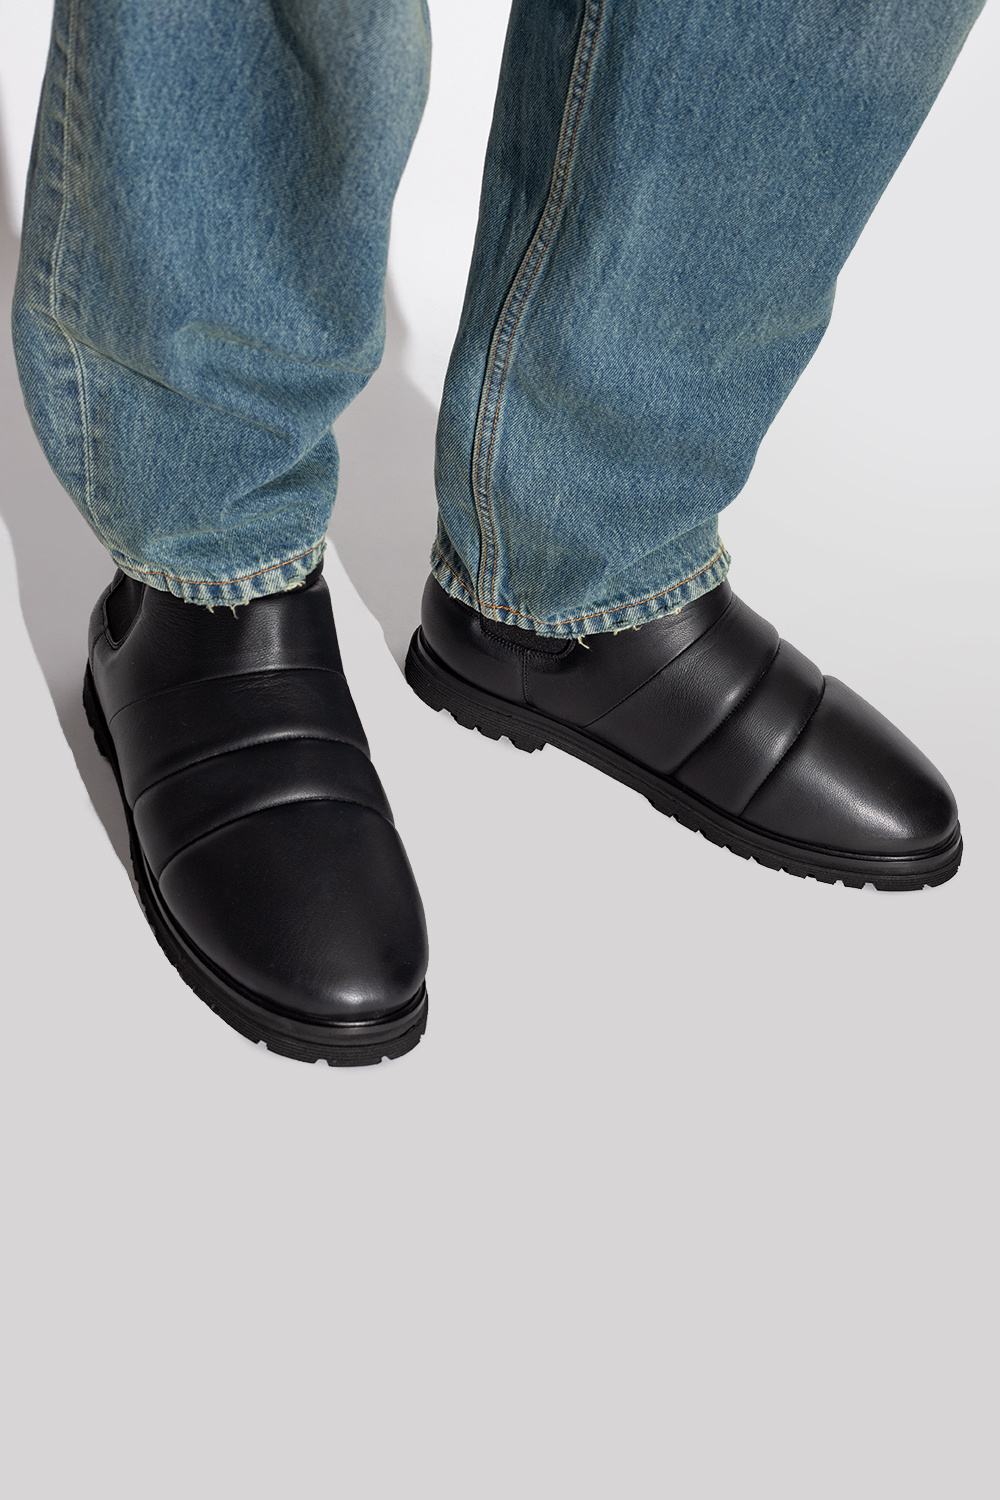 Nanushka ‘BEDE’ leather boots